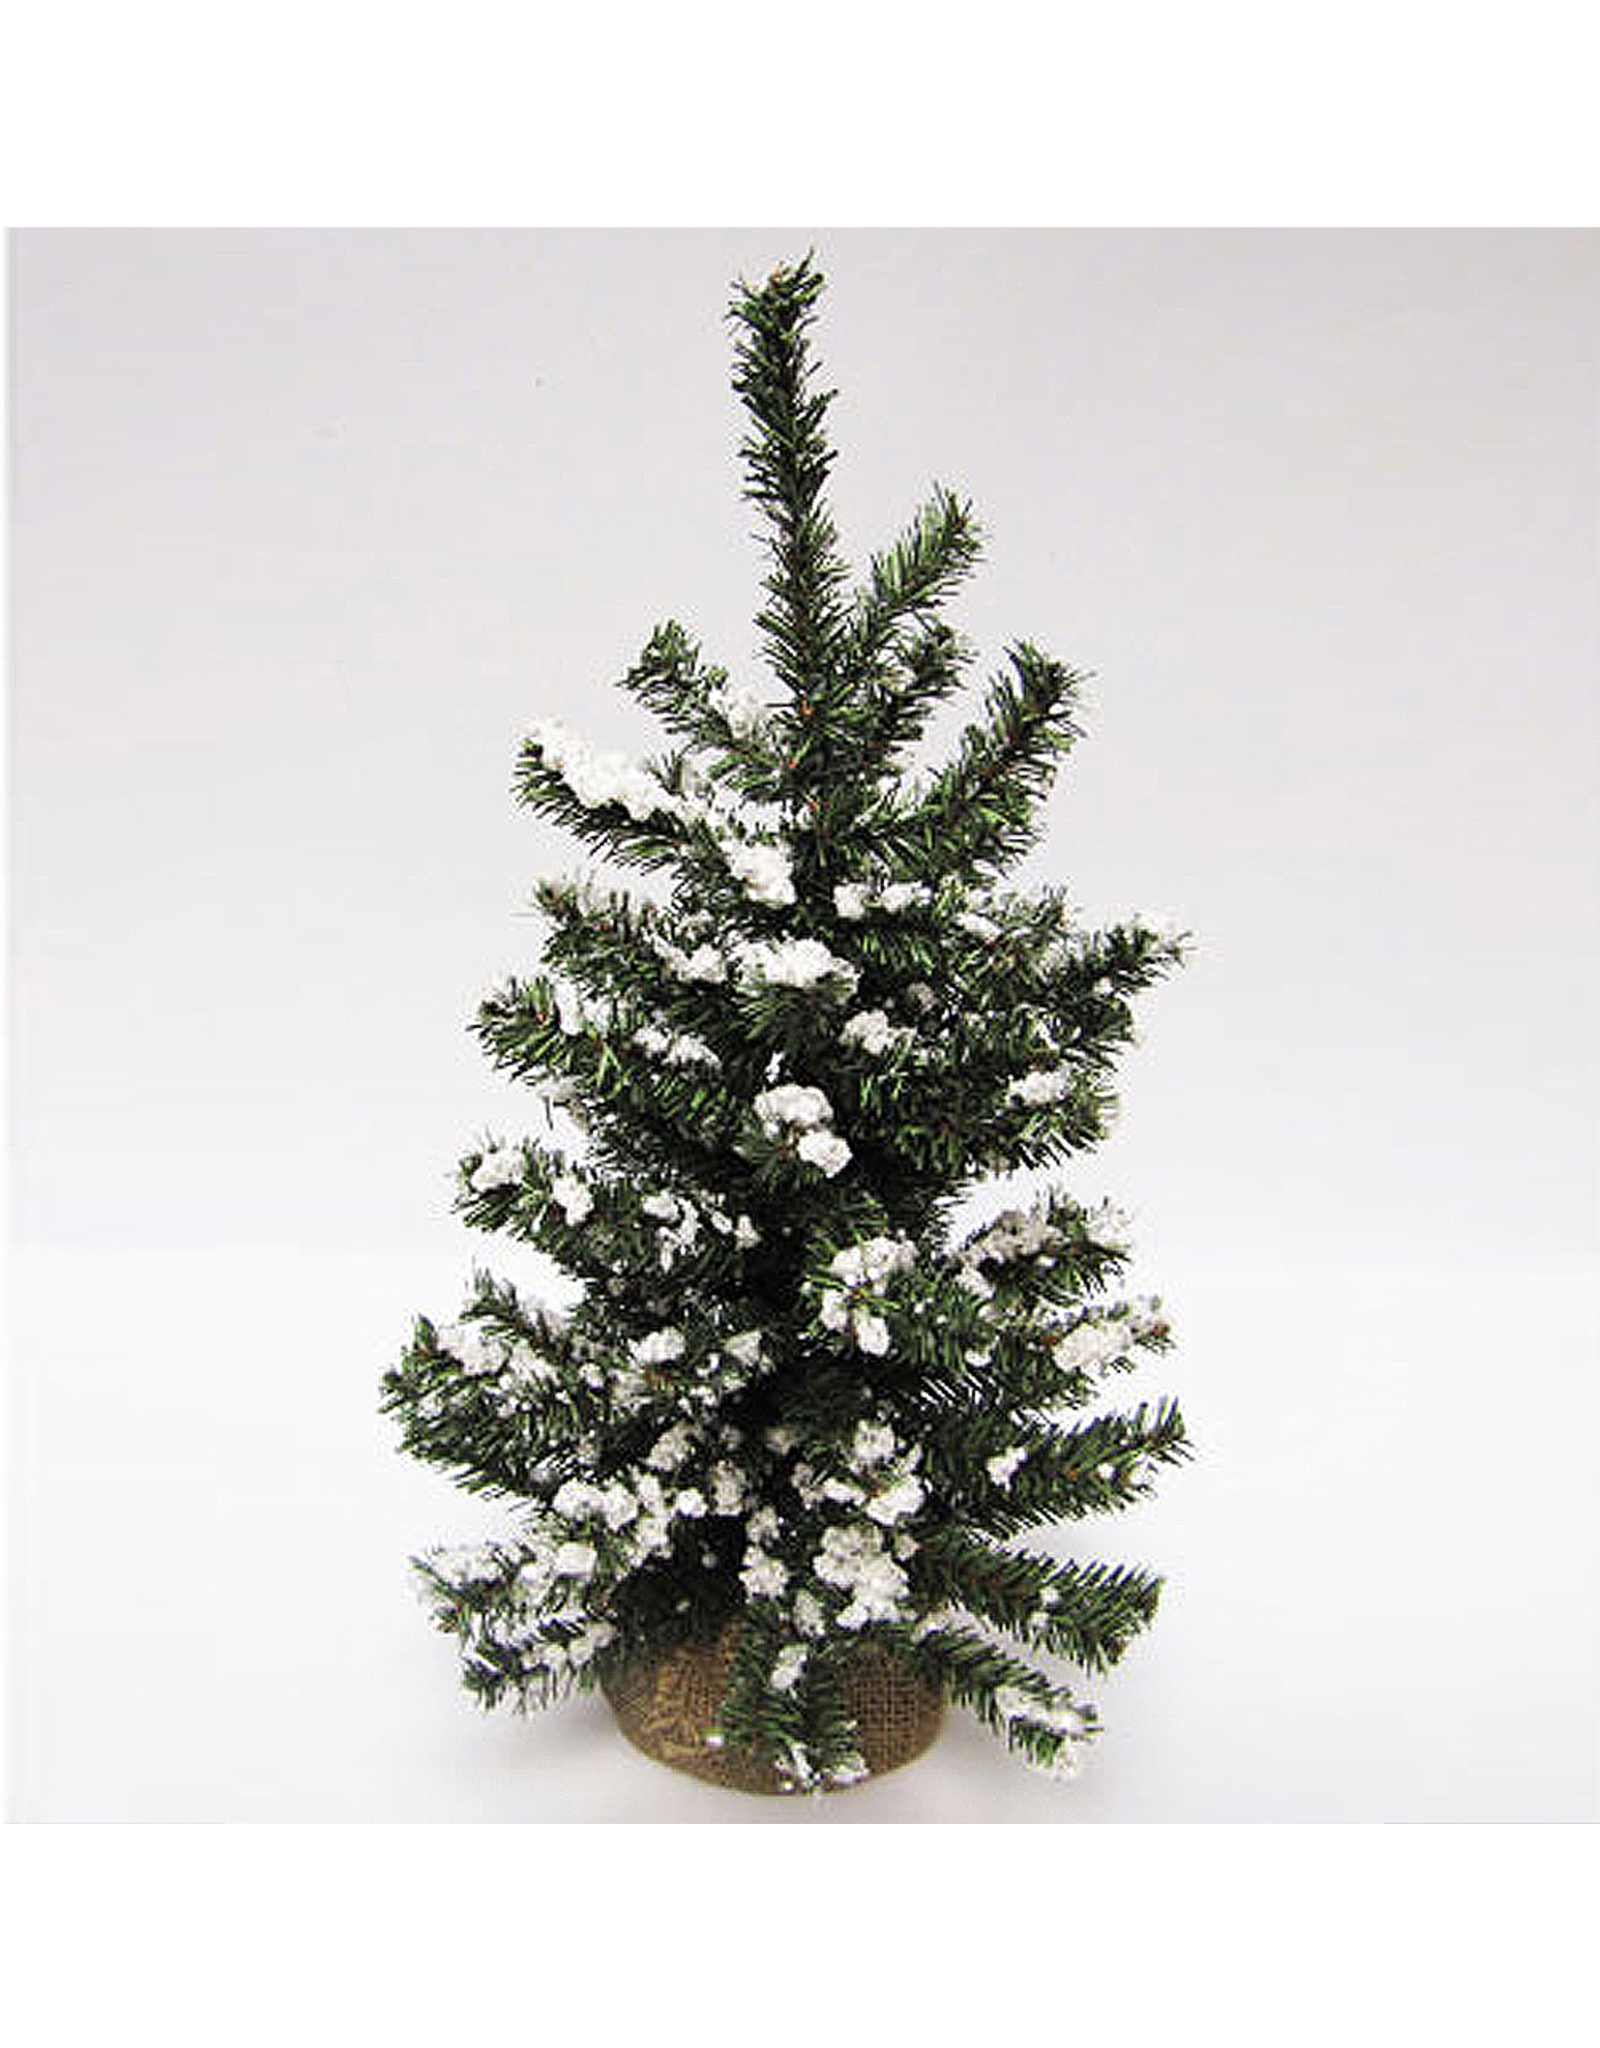 Darice Mini Christmas Tree Snow Glittered w Burlap Base 18 inch